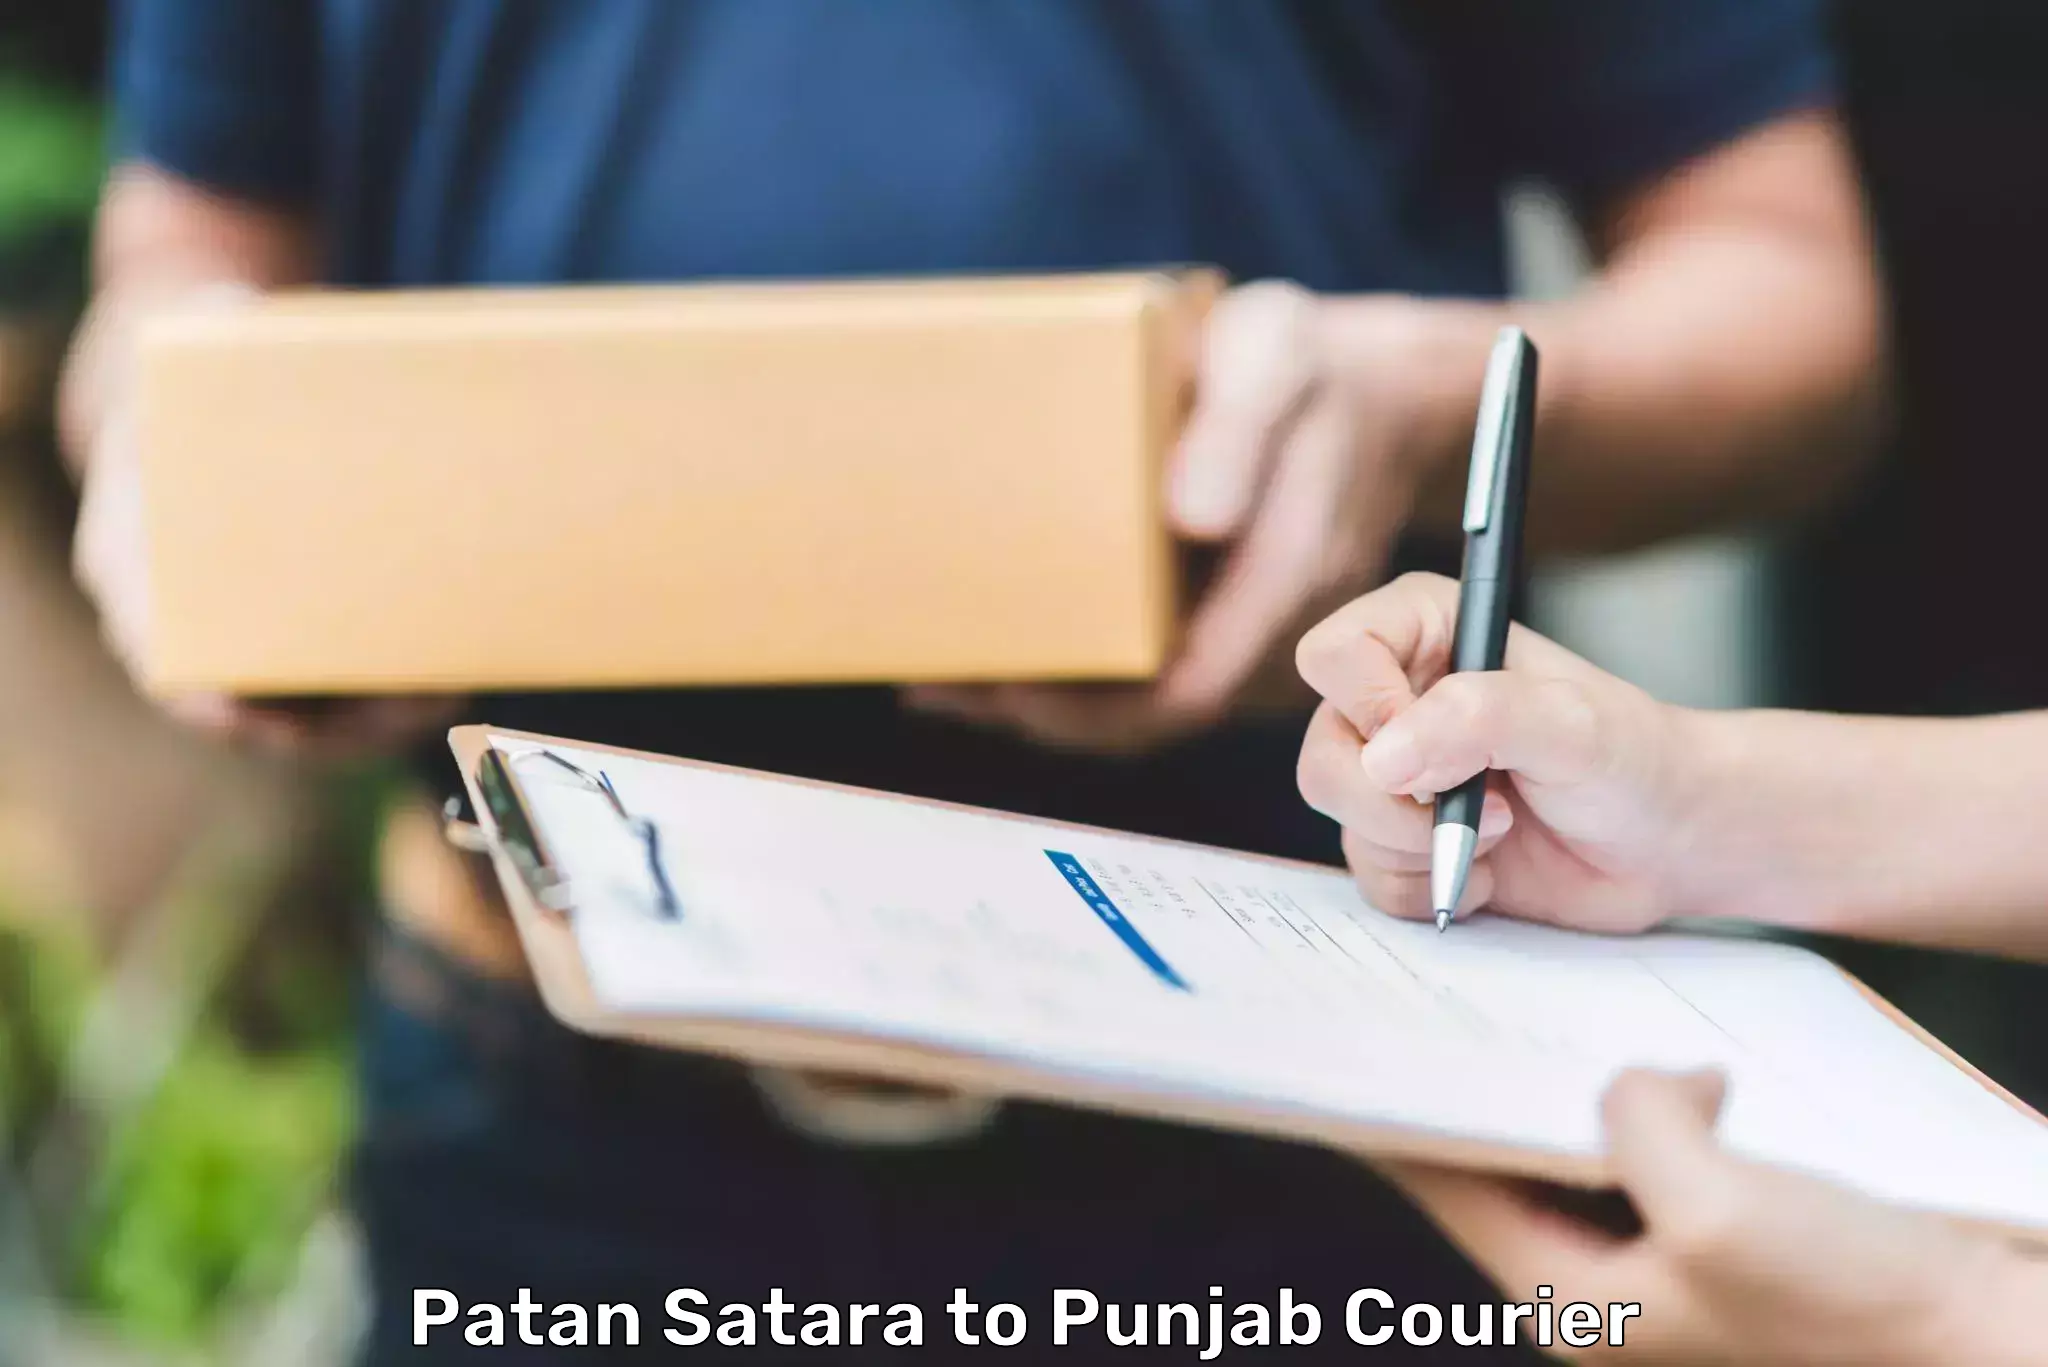 High-priority parcel service Patan Satara to Zirakpur